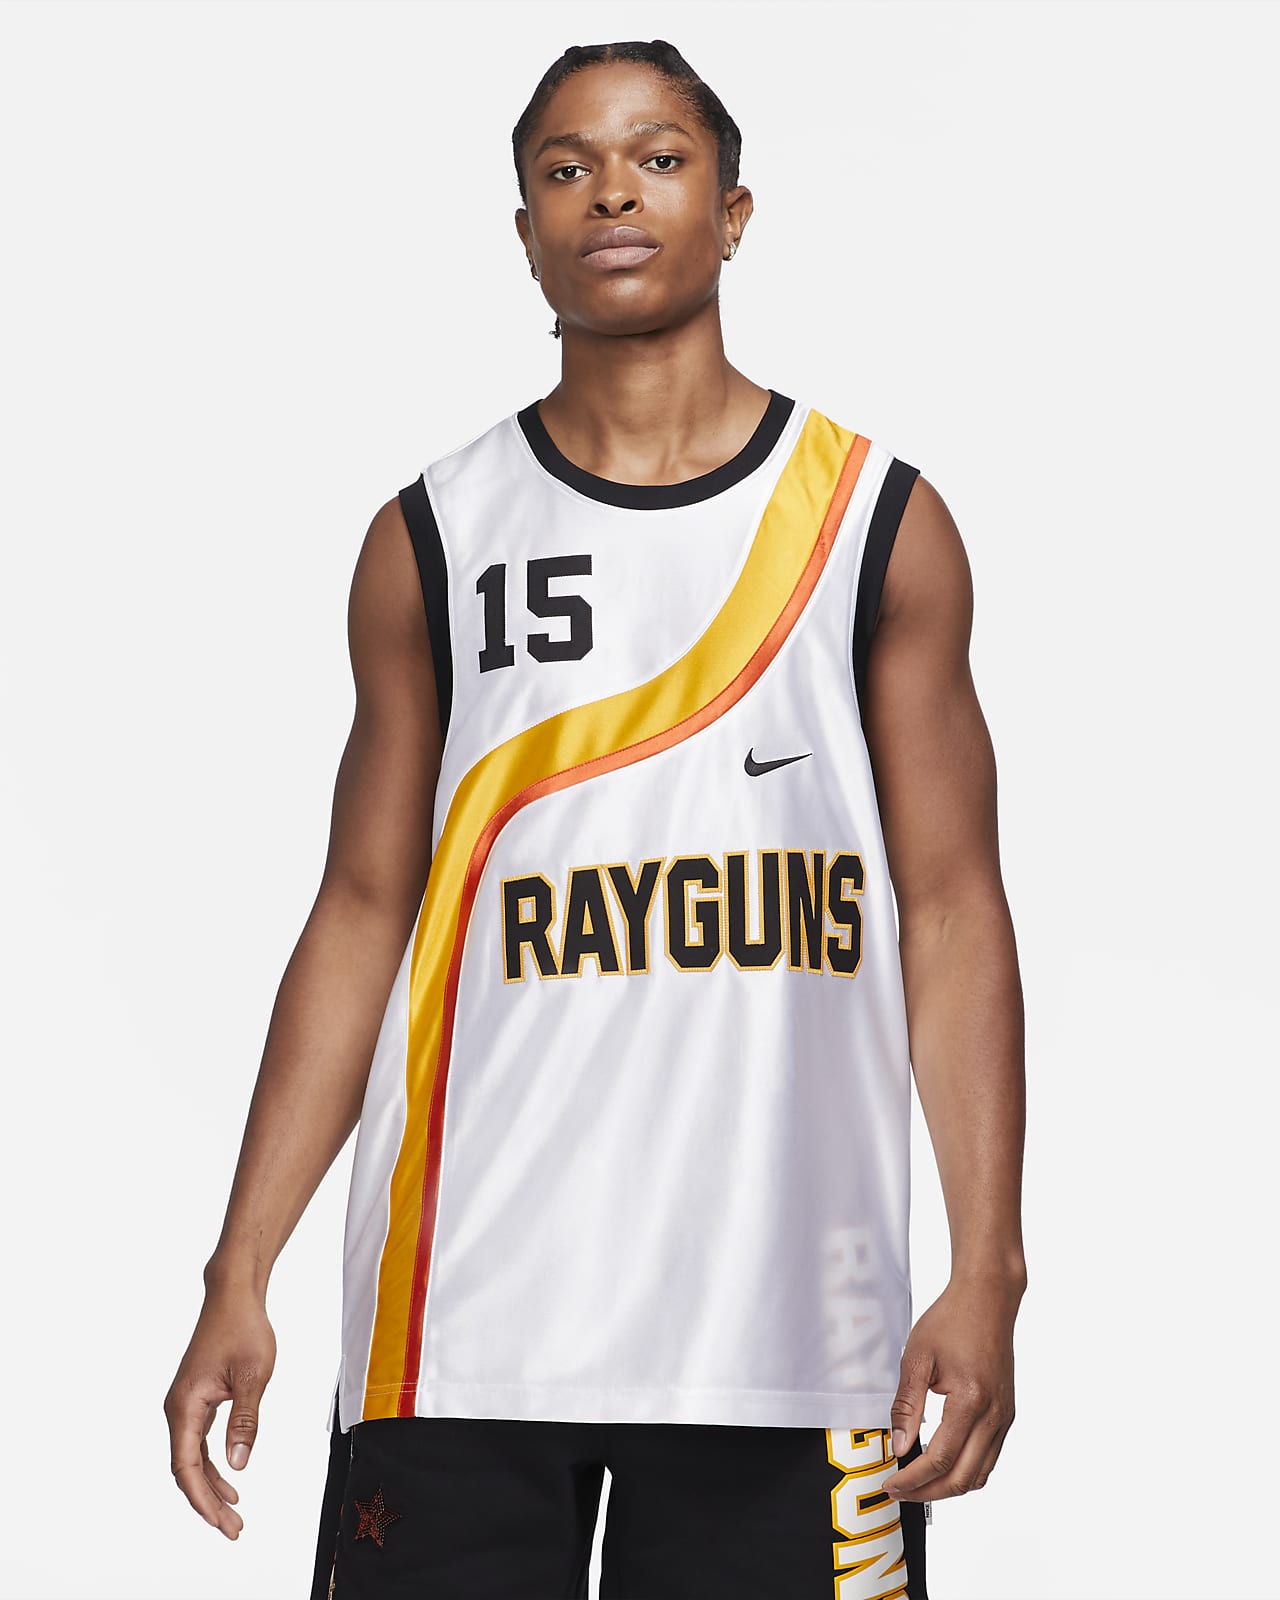 Nike Rayguns Men's Premium Basketball Jersey